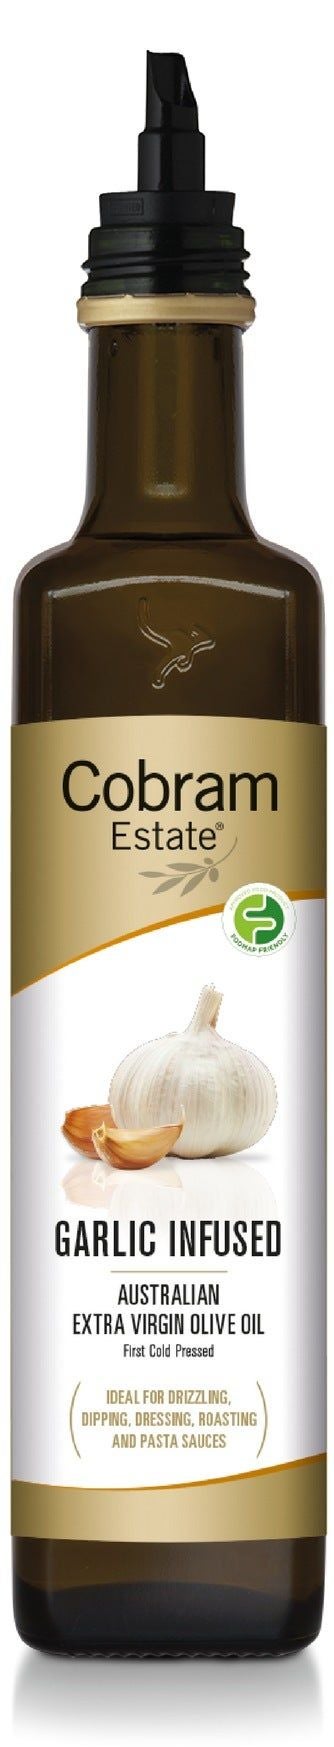 Cobram Estate橄榄油评论